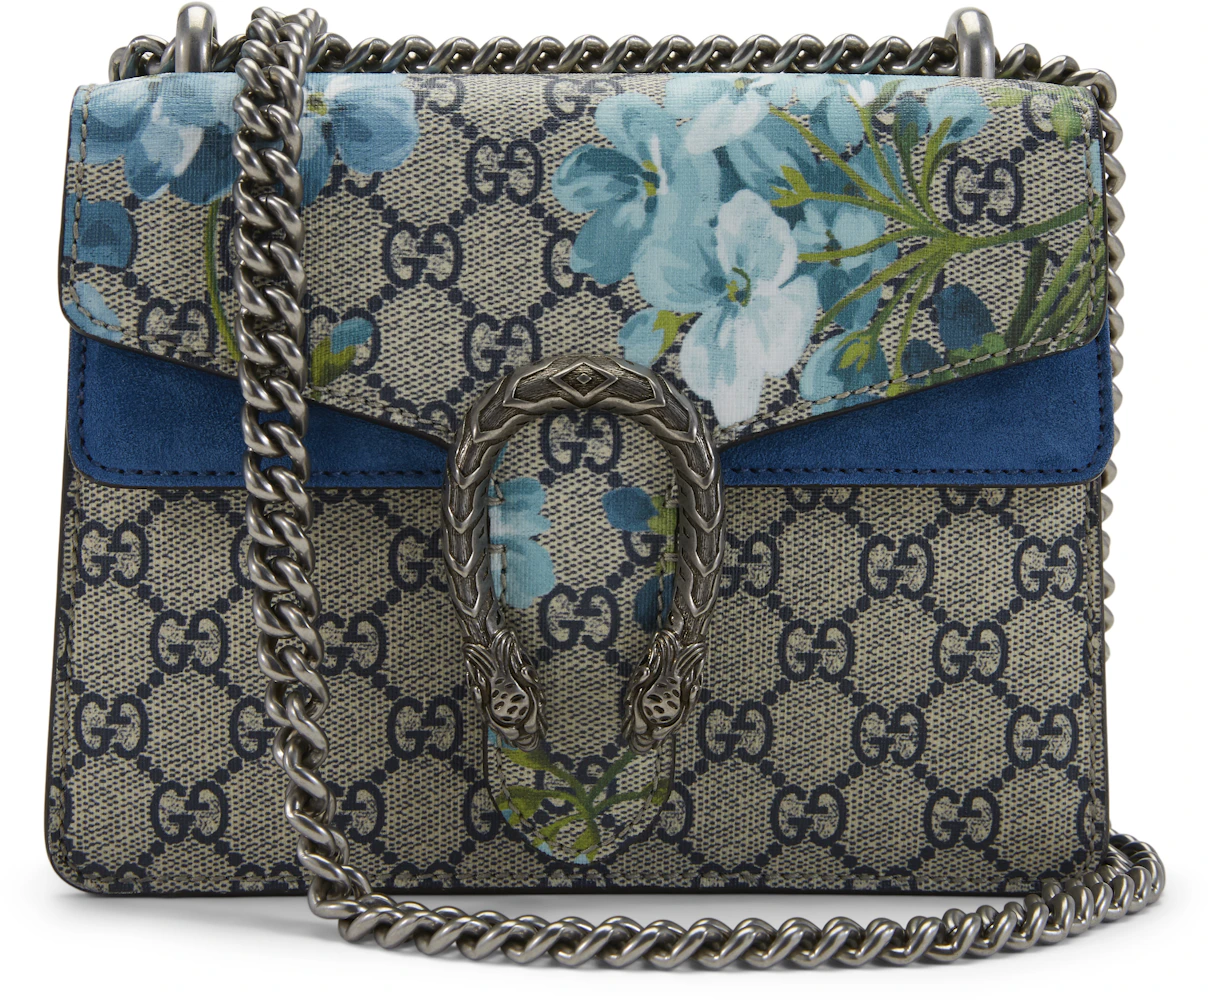 Gucci GG Supreme Blooms Clutch - Blue Clutches, Handbags - GUC1270935